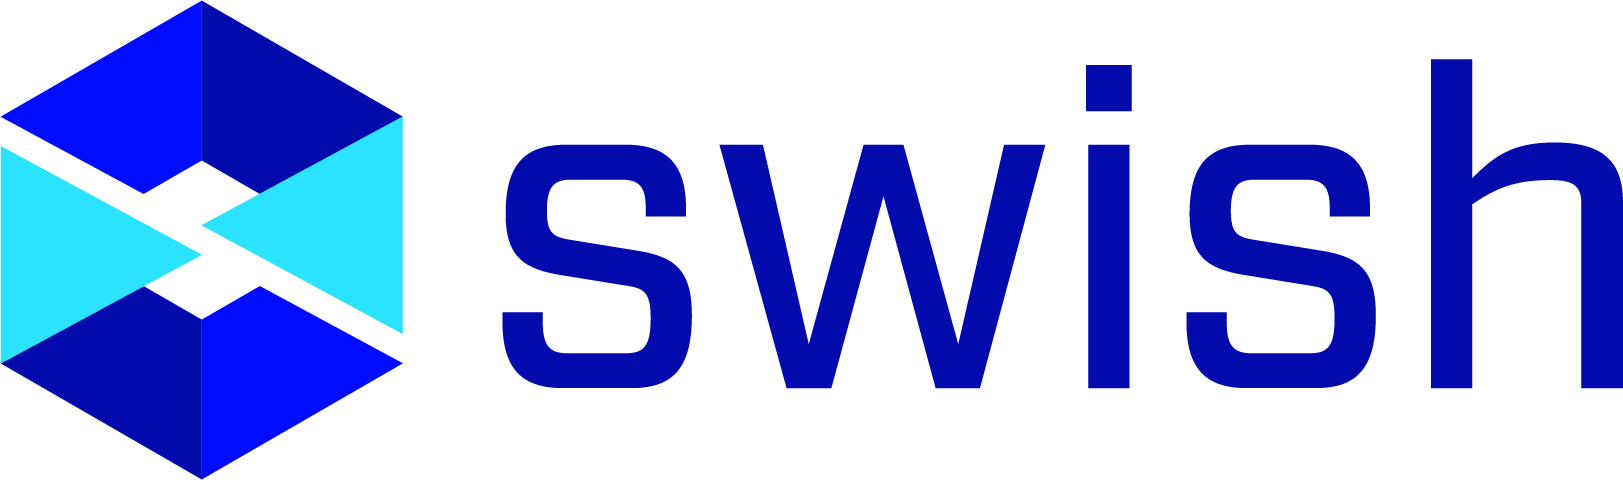 Swishdata logo